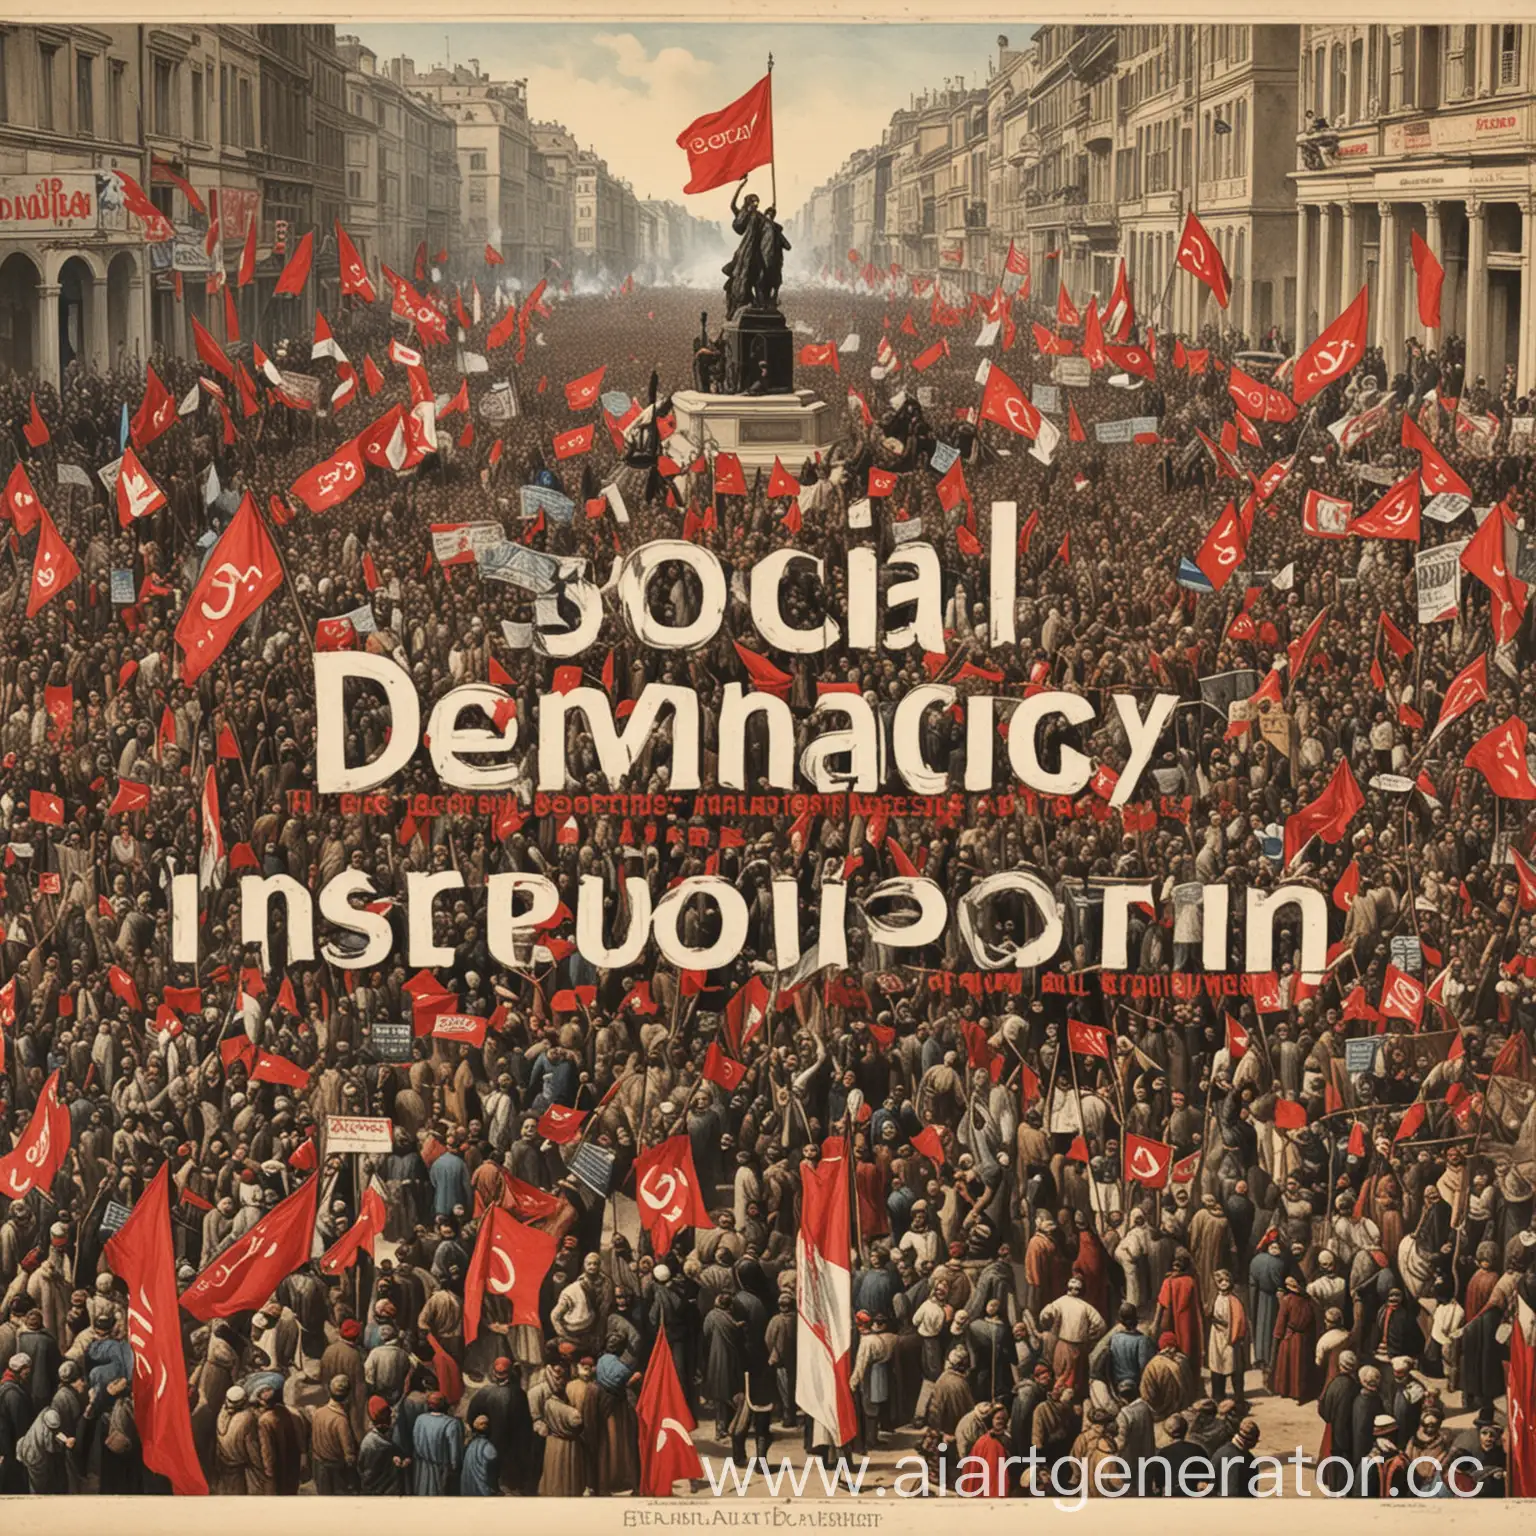 Global-Social-Democracy-Revolution-Striving-for-Equality